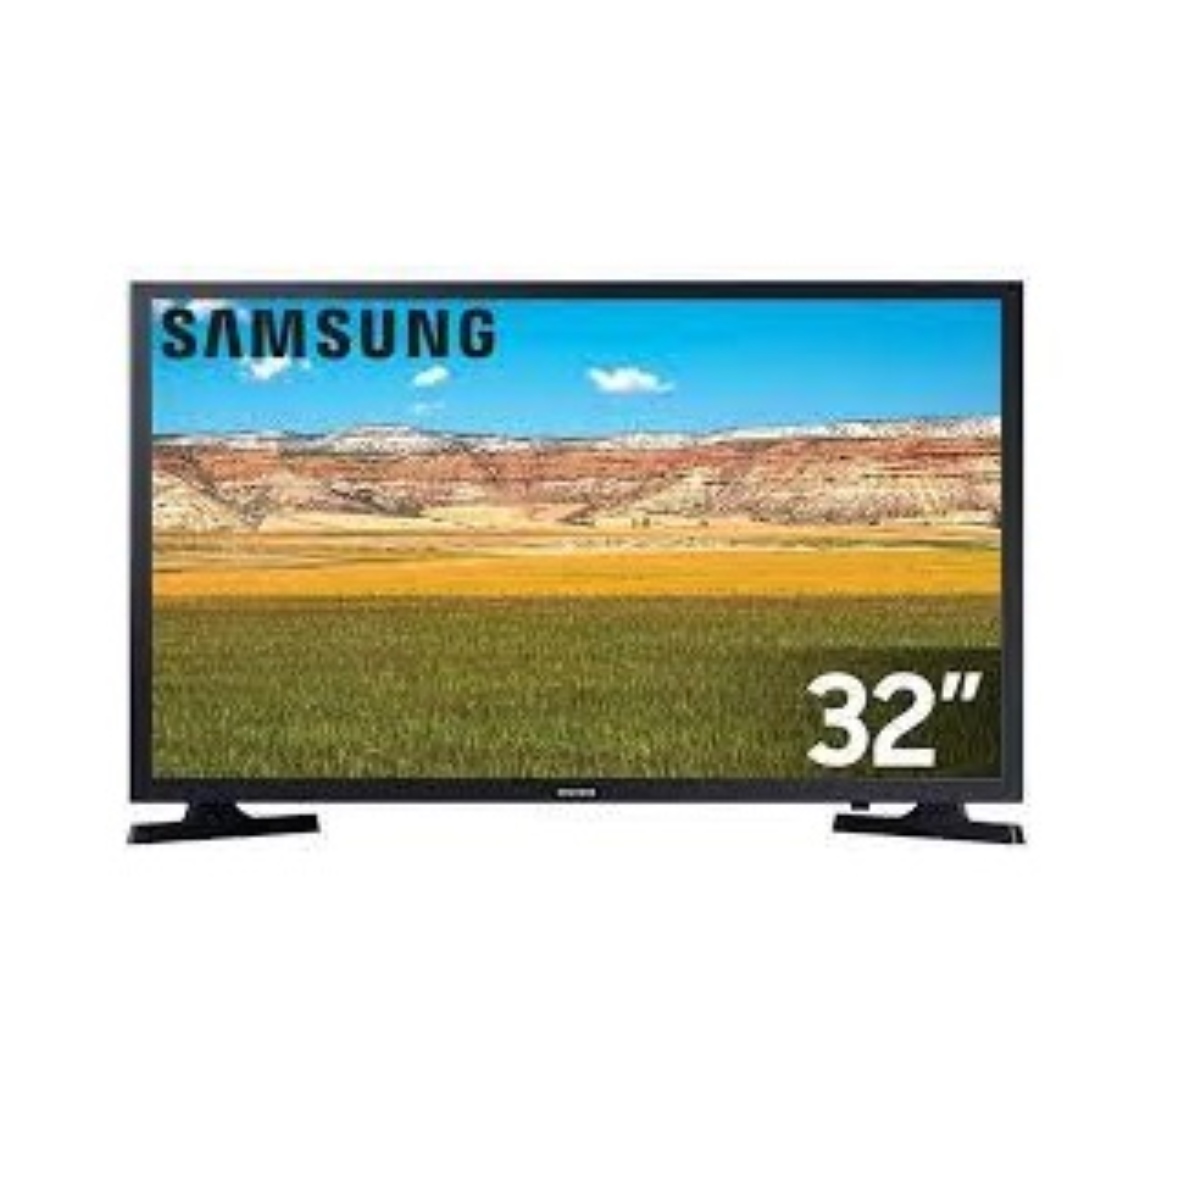 Samsung TV 32" LED 